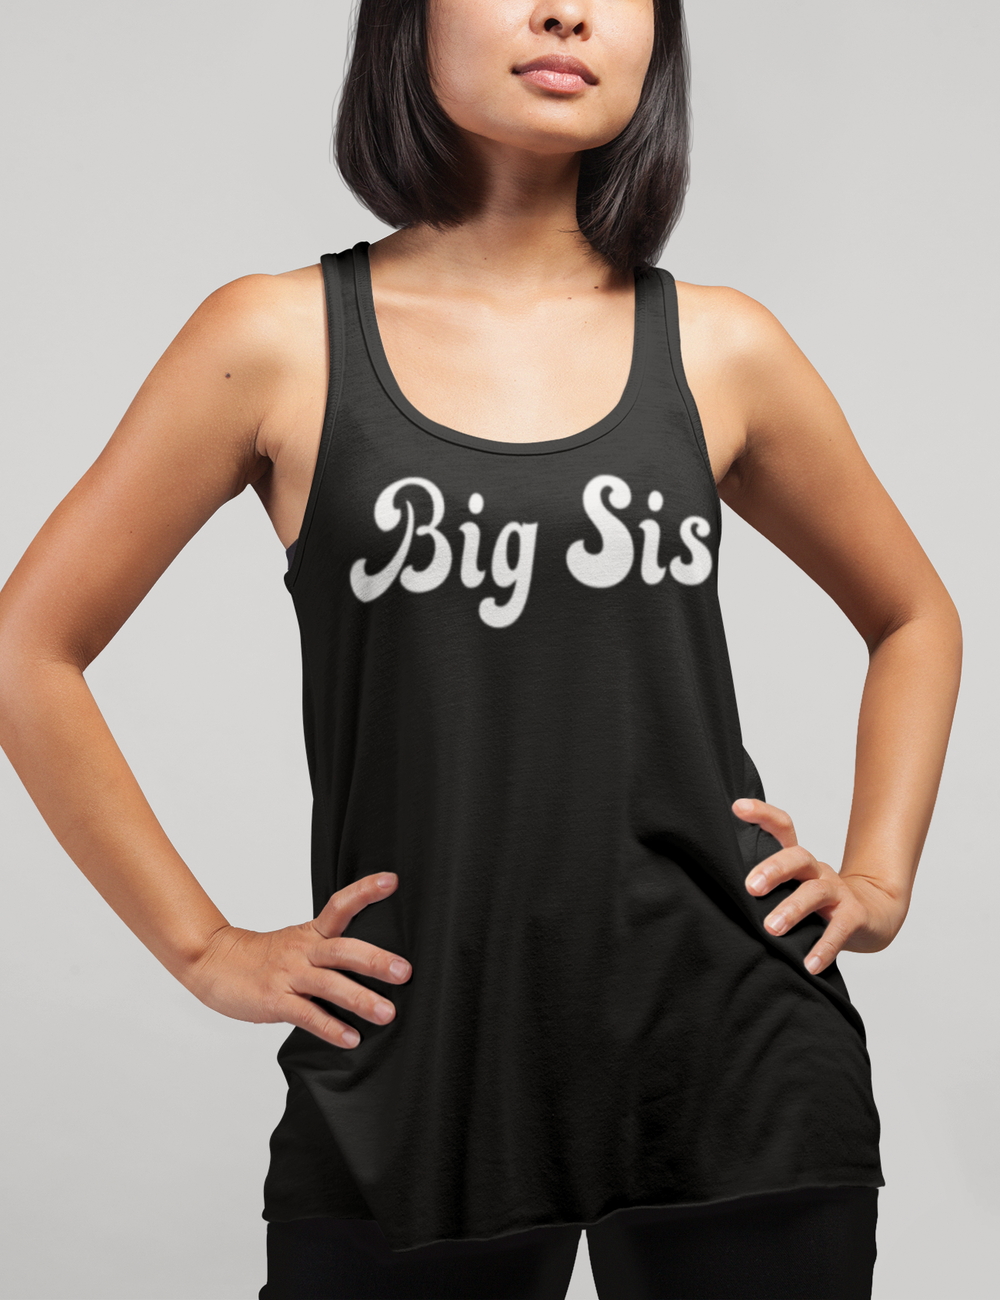 Big Sis | Women's Cut Racerback Tank Top OniTakai